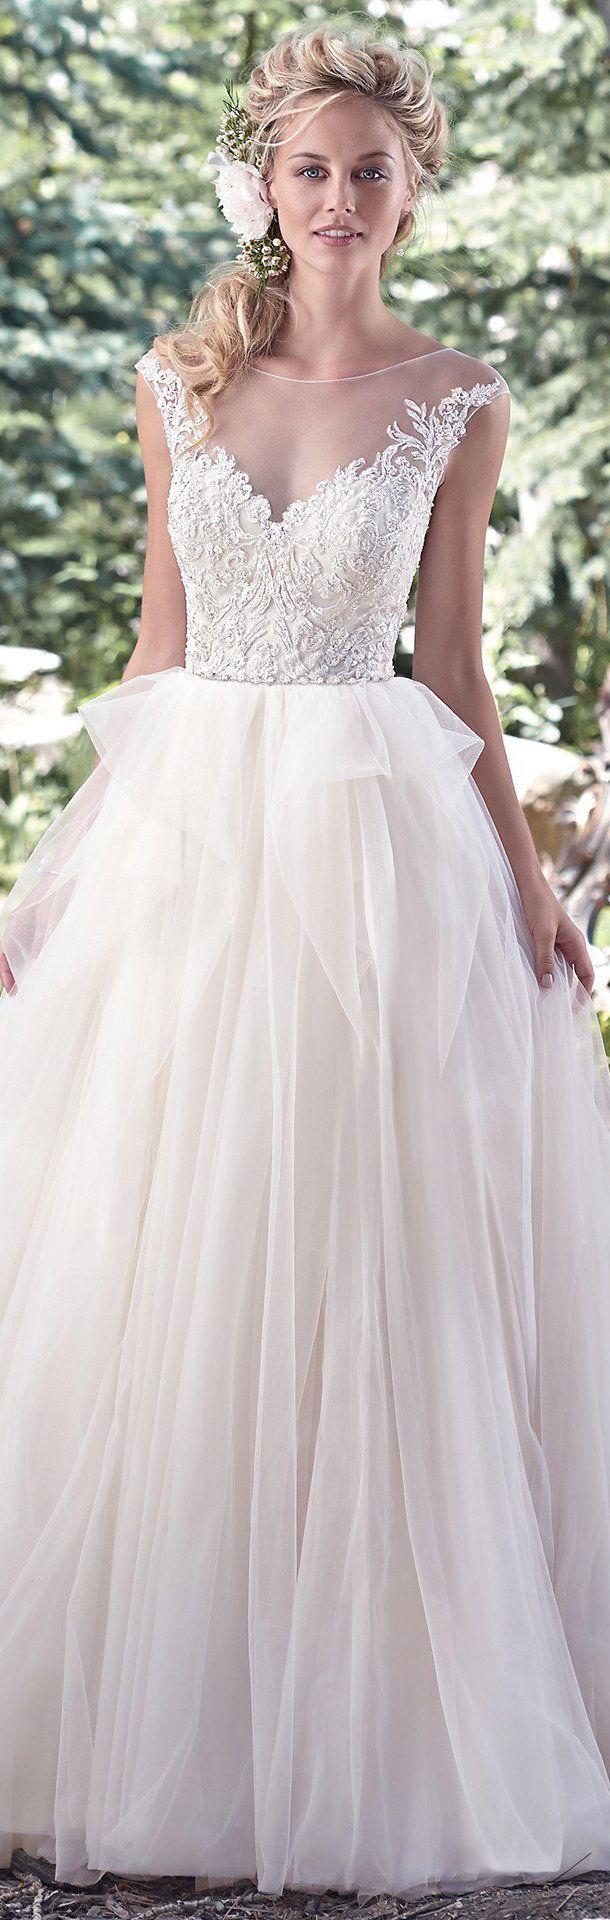 Wedding - White Beauty